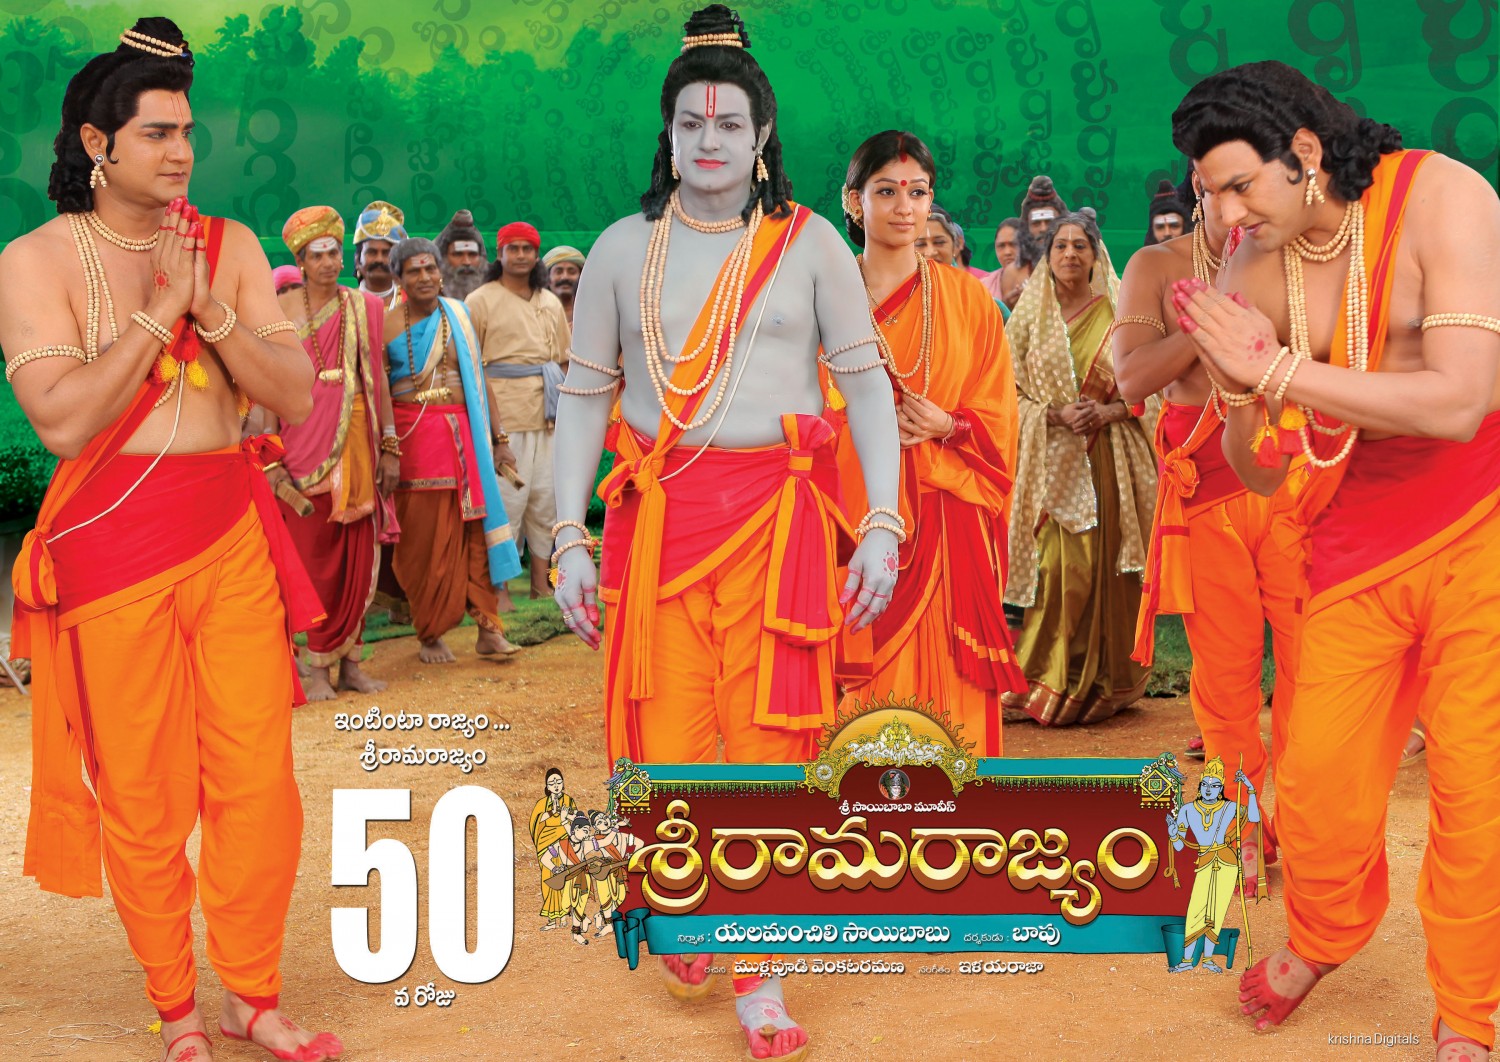 Extra Large Movie Poster Image for Sri Rama Rajyam (#6 of 10)